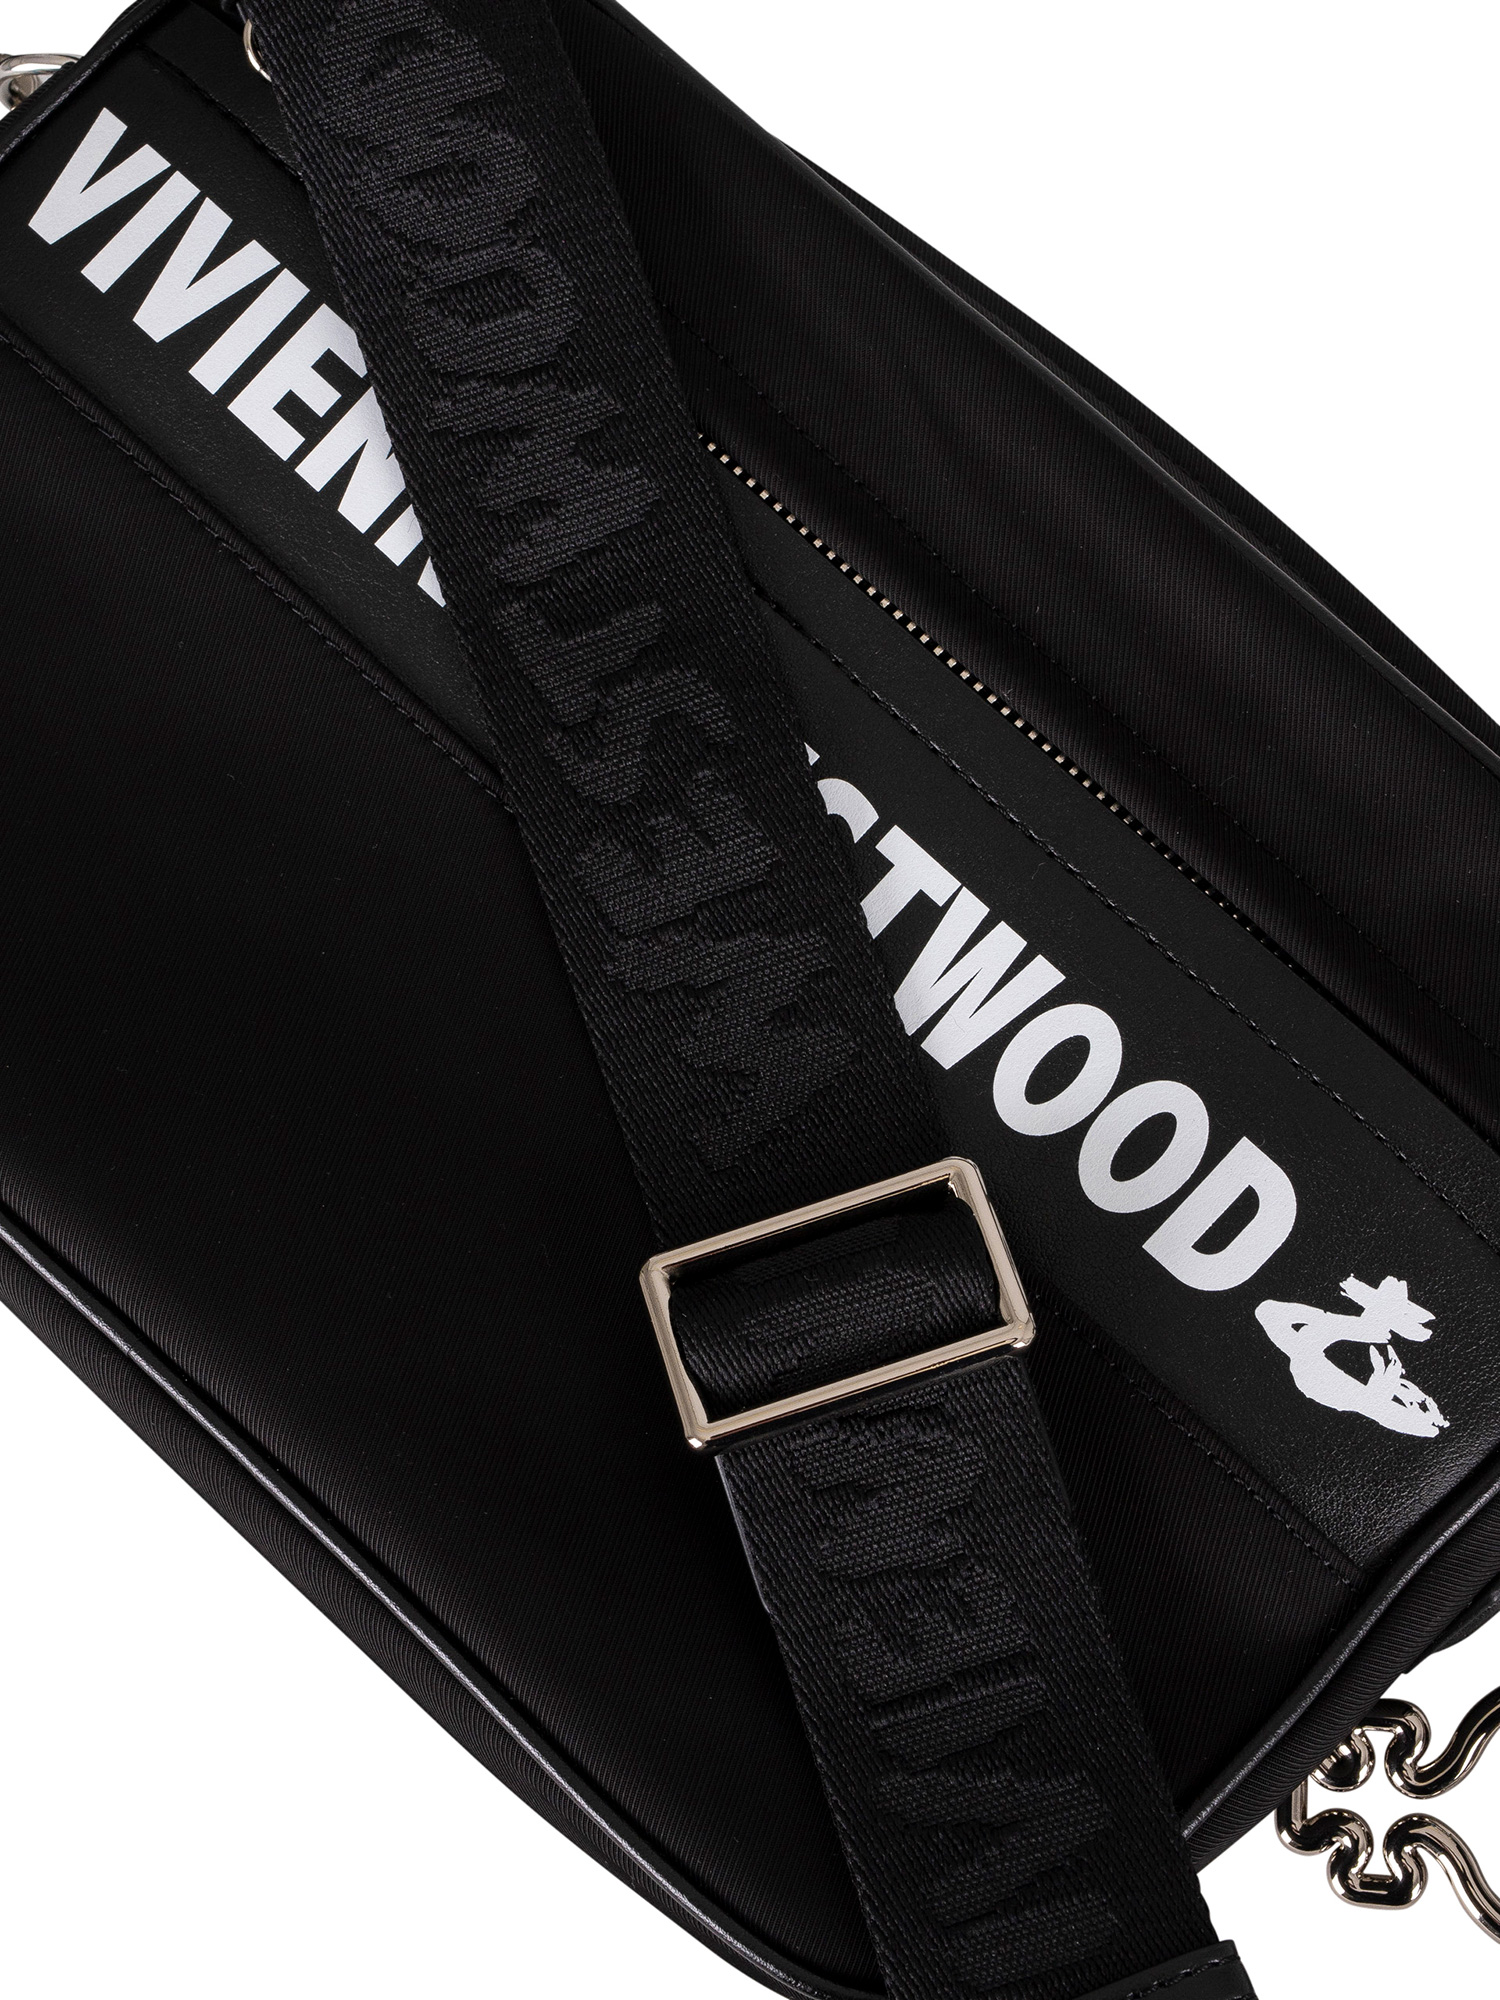 Vivienne Westwood Lisa Large Camera Bag - Black